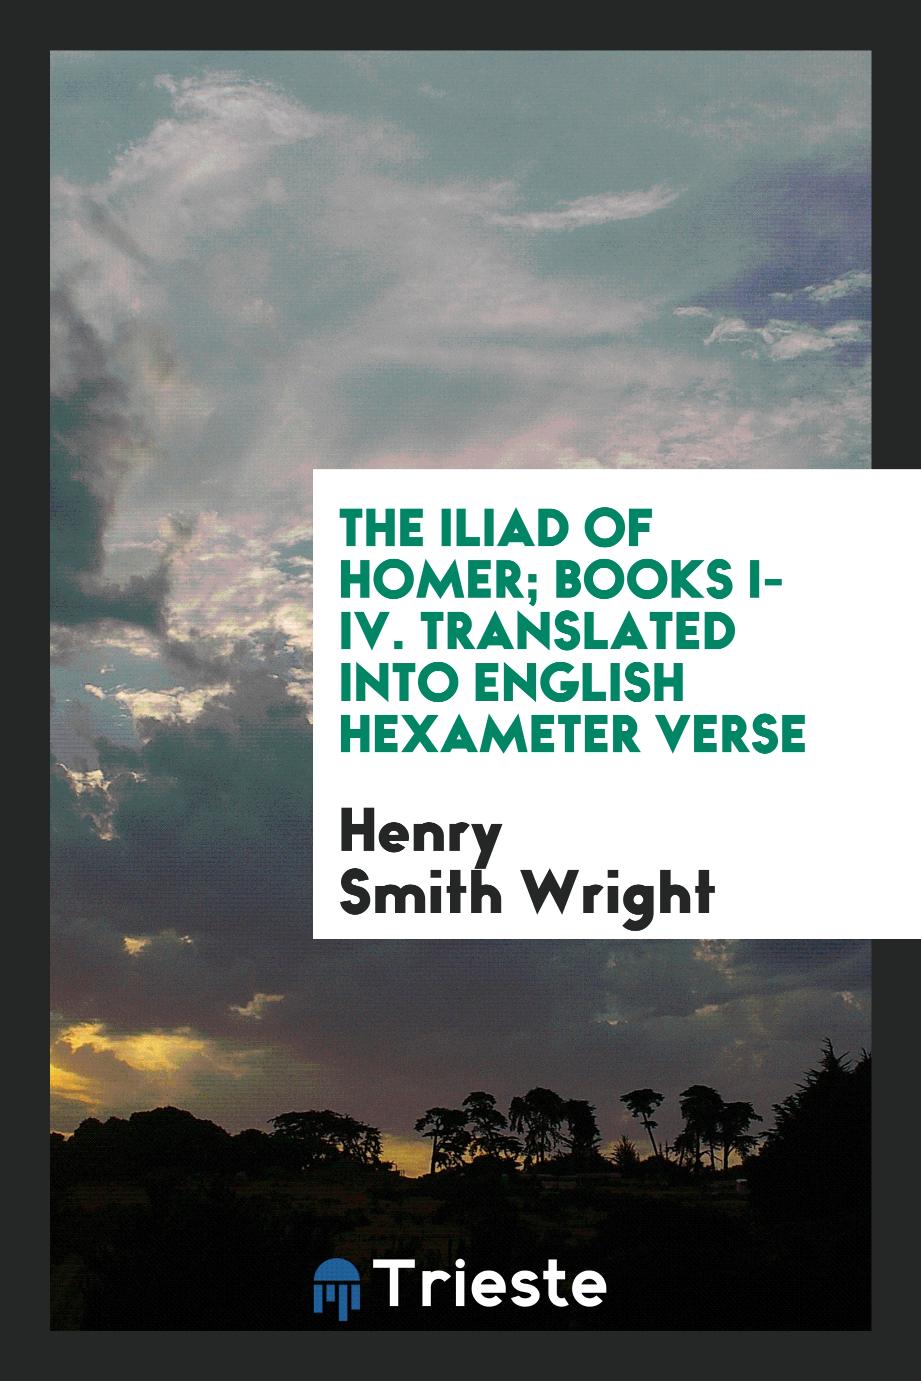 The iliad of Homer; books I-IV. Translated into English hexameter verse